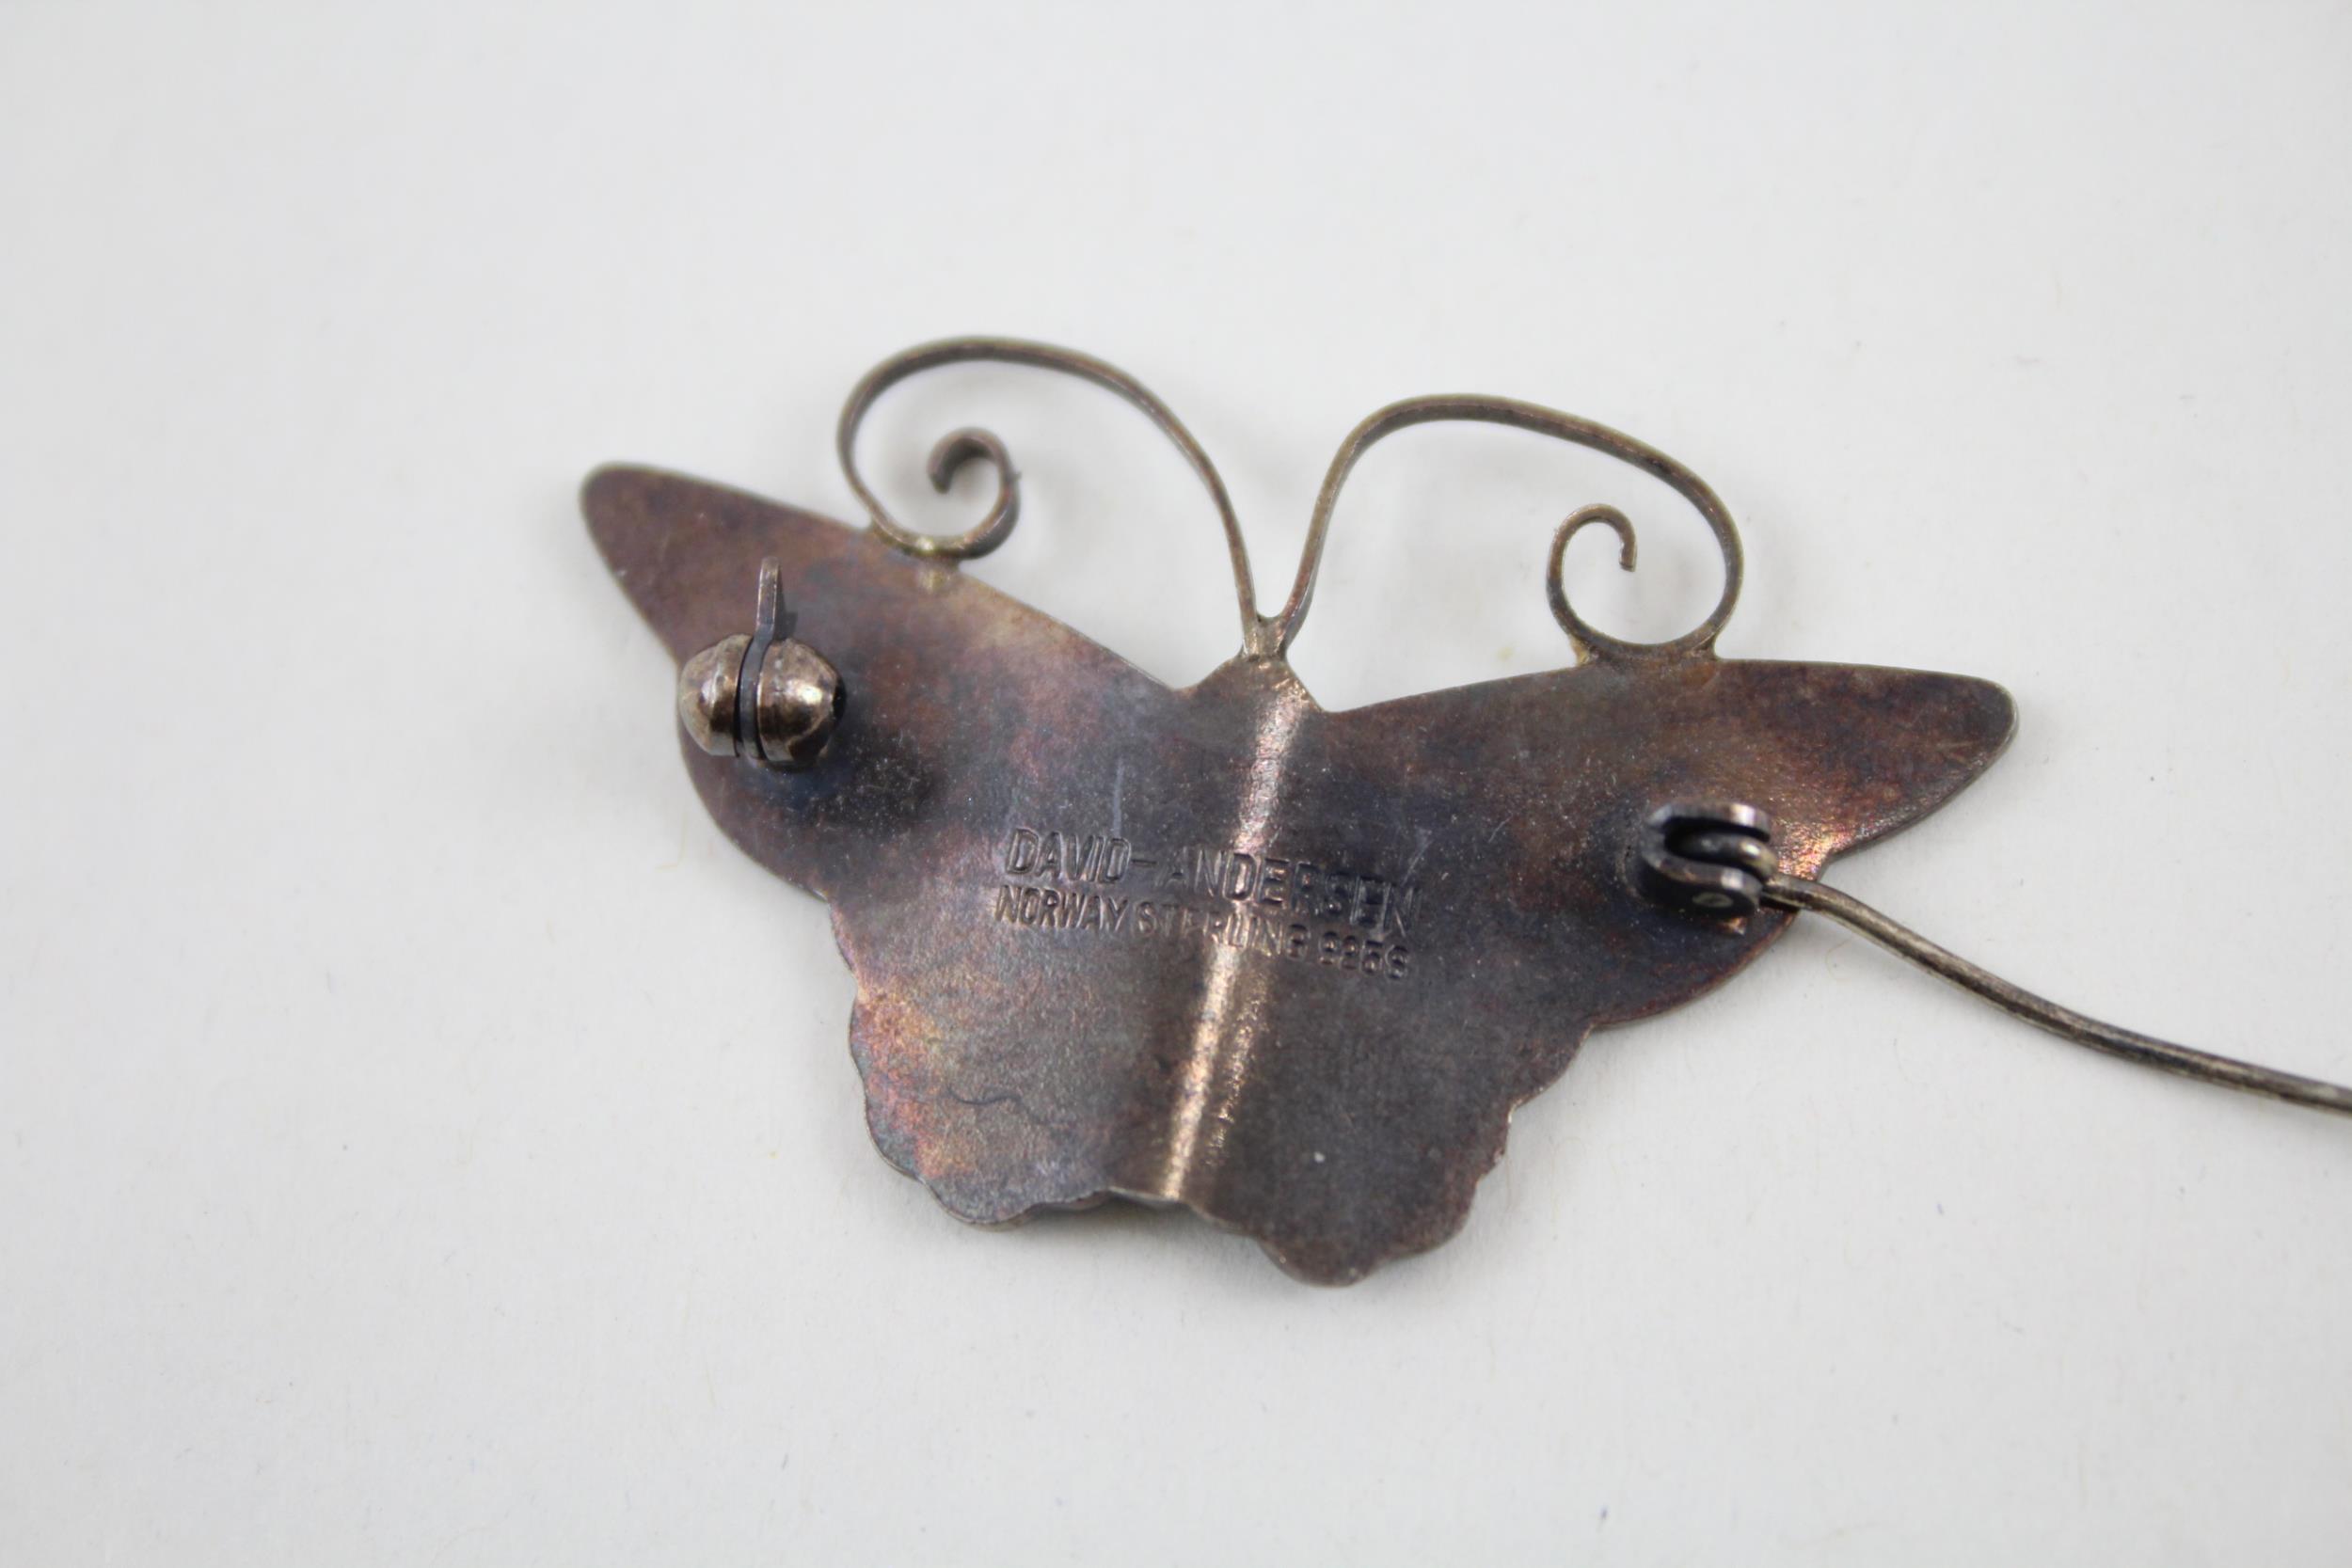 Silver enamel butterfly brooch by David Anderson (7g) - Image 5 of 5